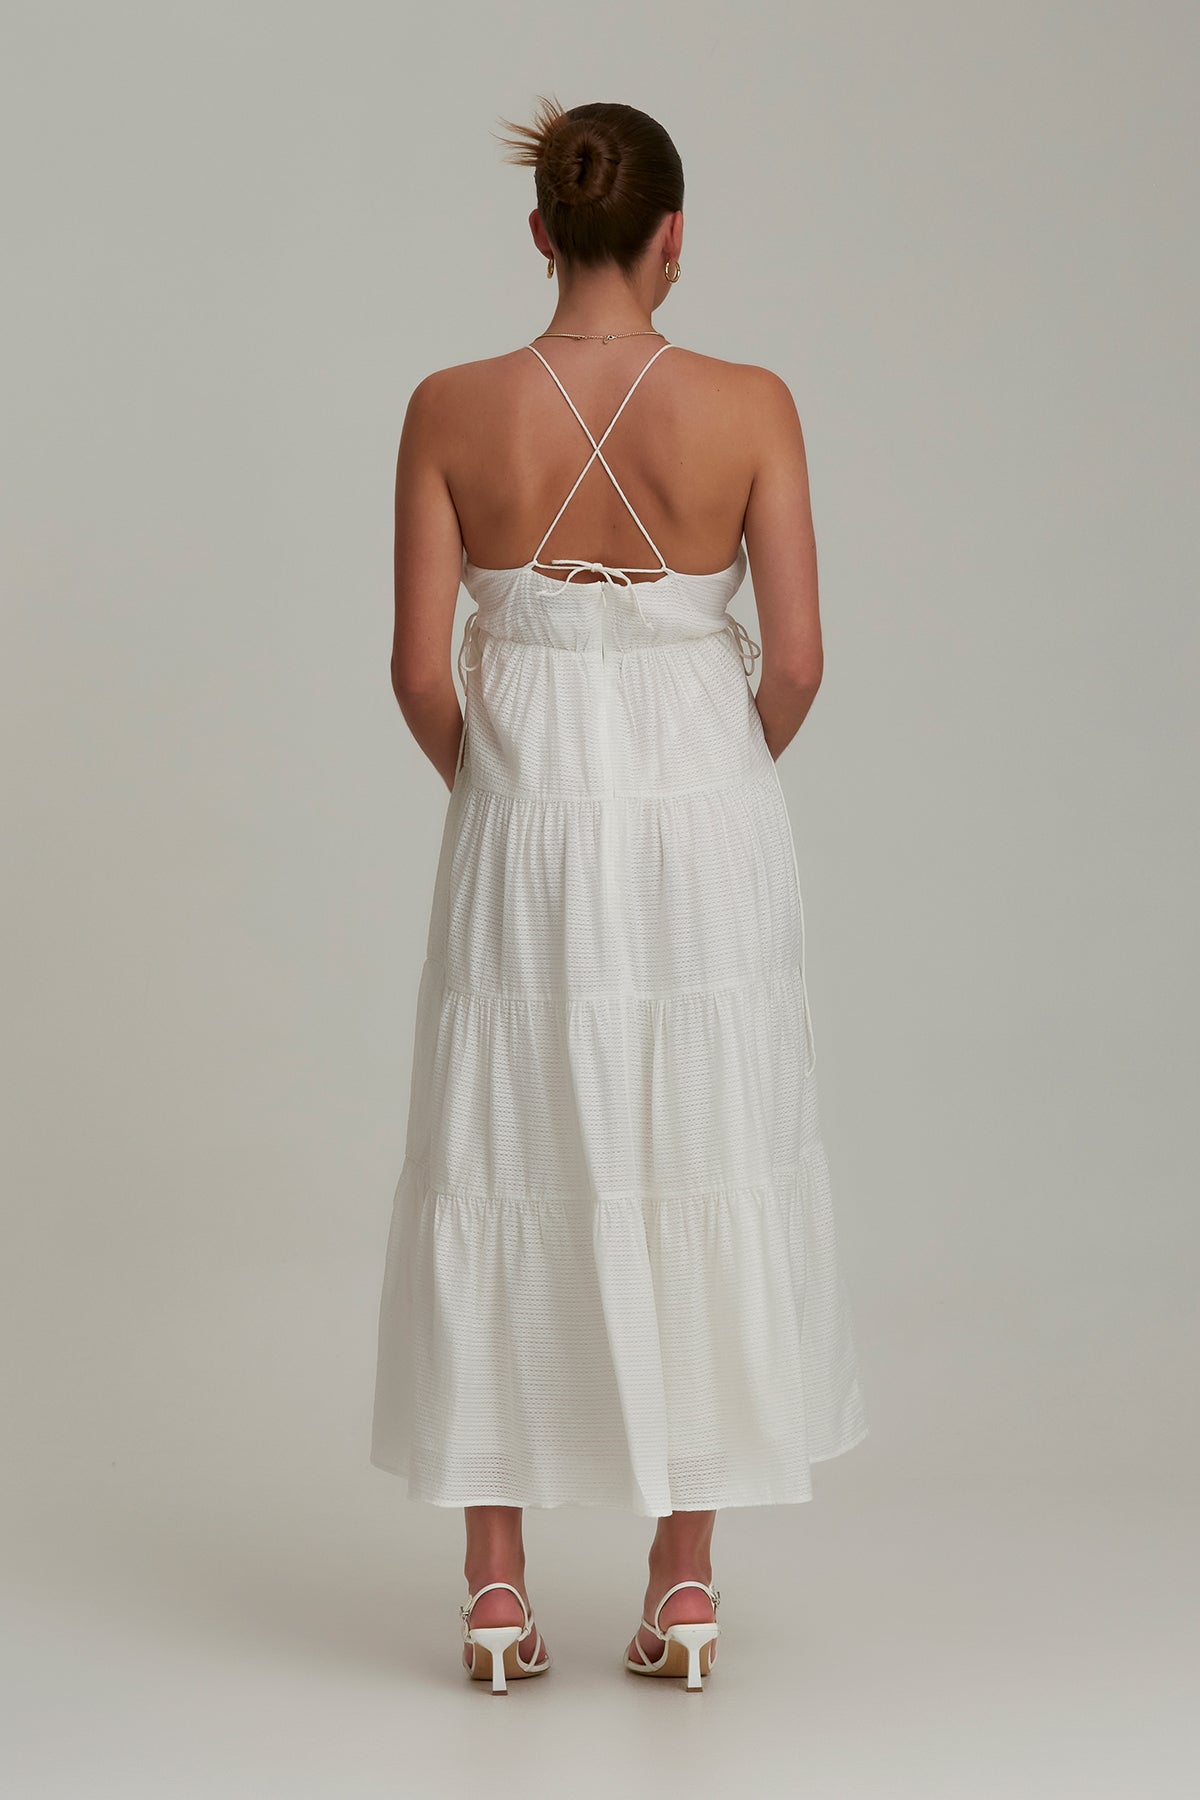 Finders - Georgia Midi Dress - White